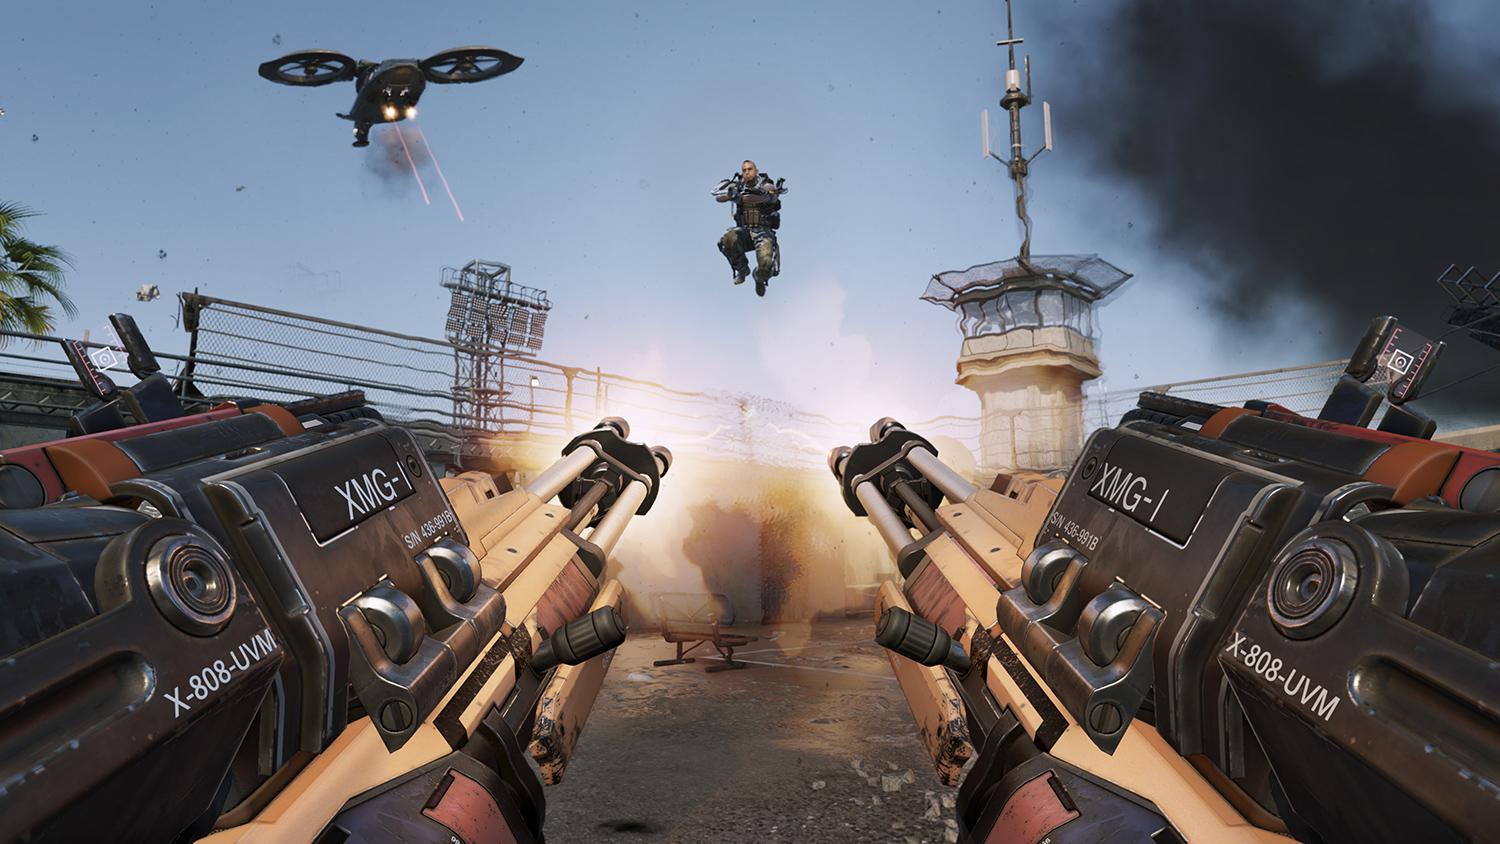 Call of Duty: Advanced Warfare Multiplayer Gameplay 